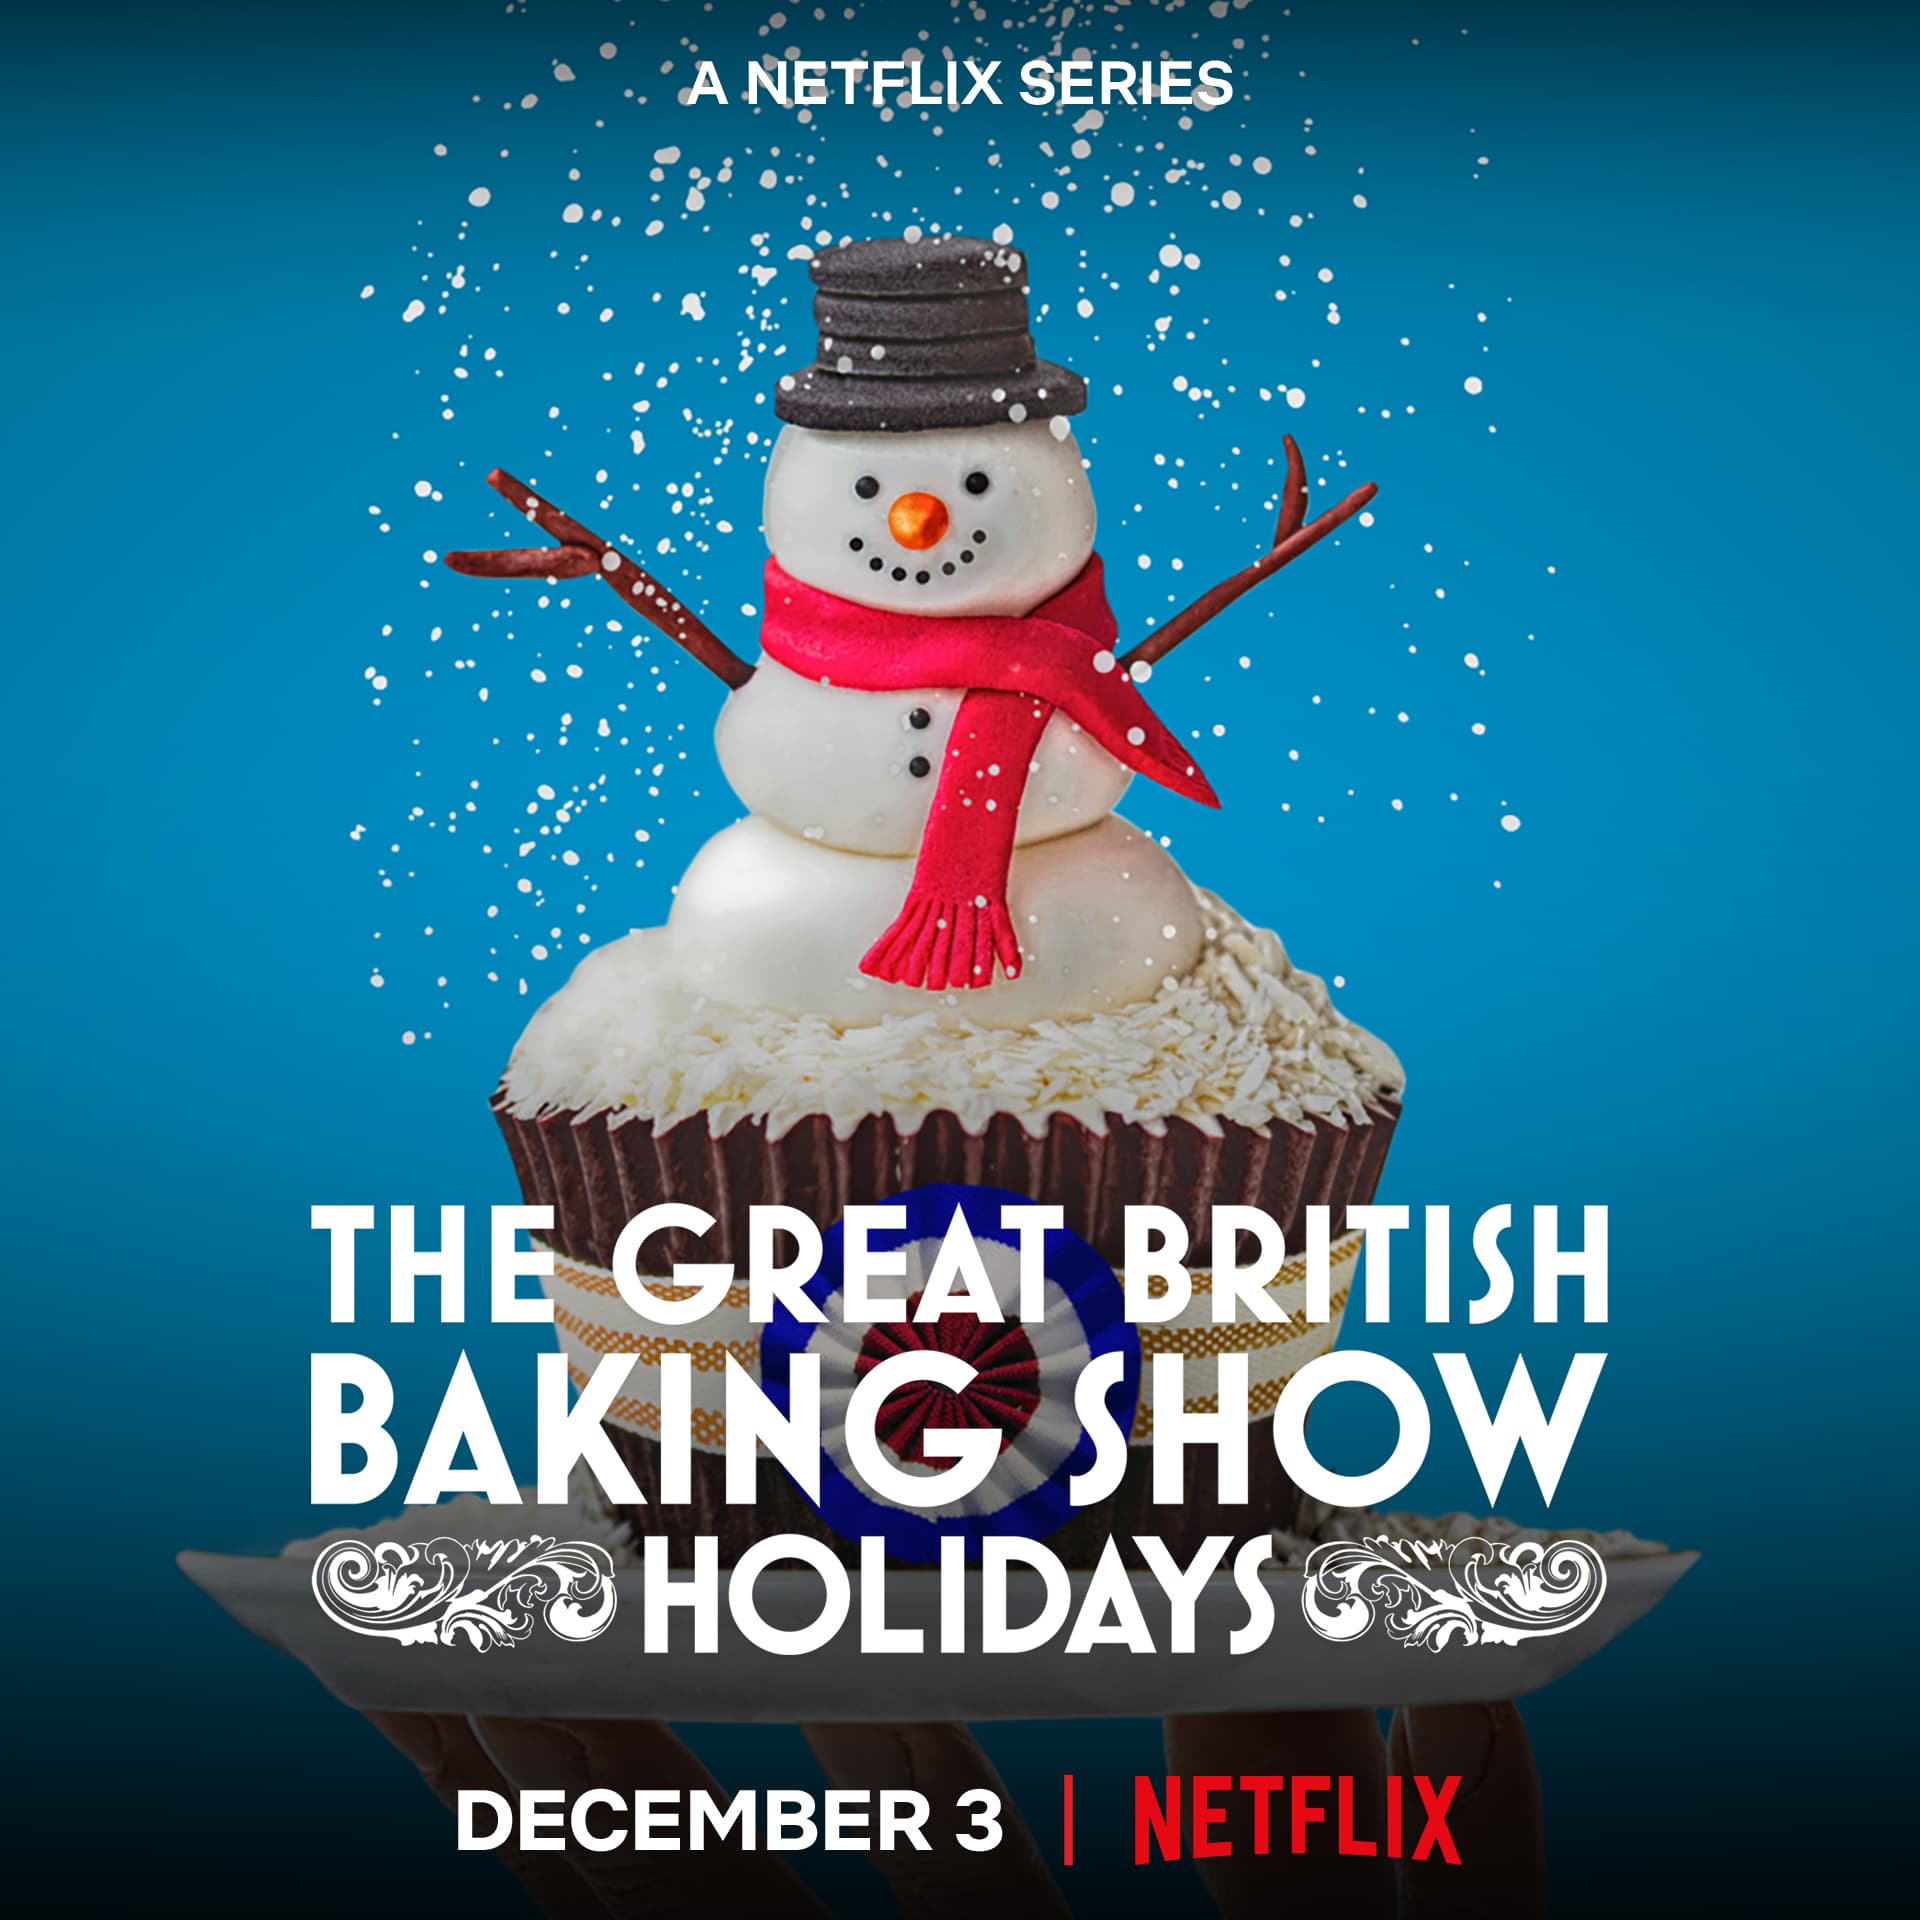 The Great British Baking Show Holidays Season 4